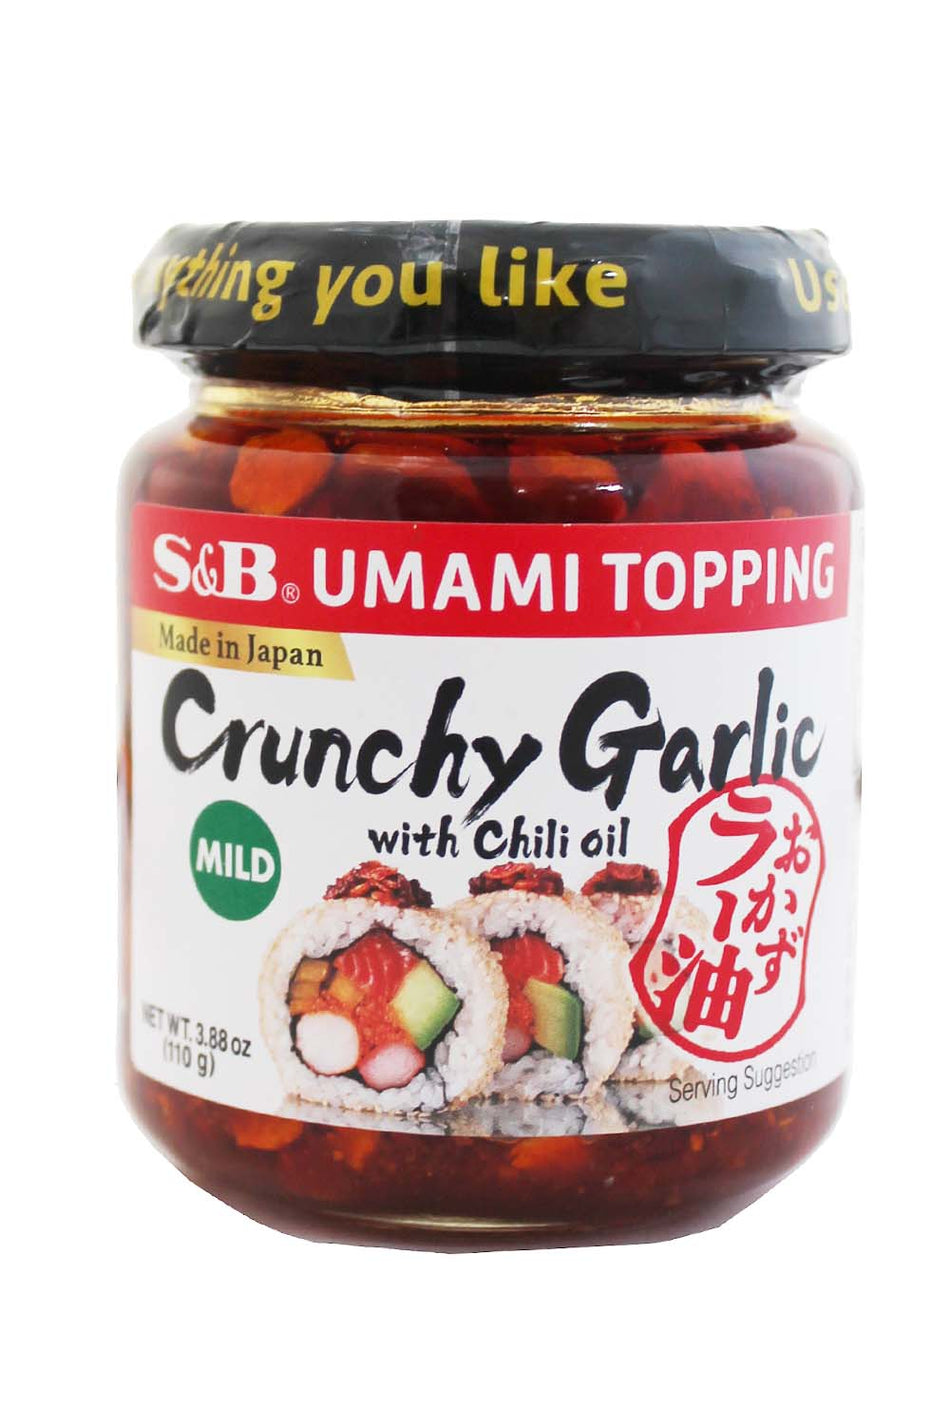 S&B Crunchy Garlic with Chili oil